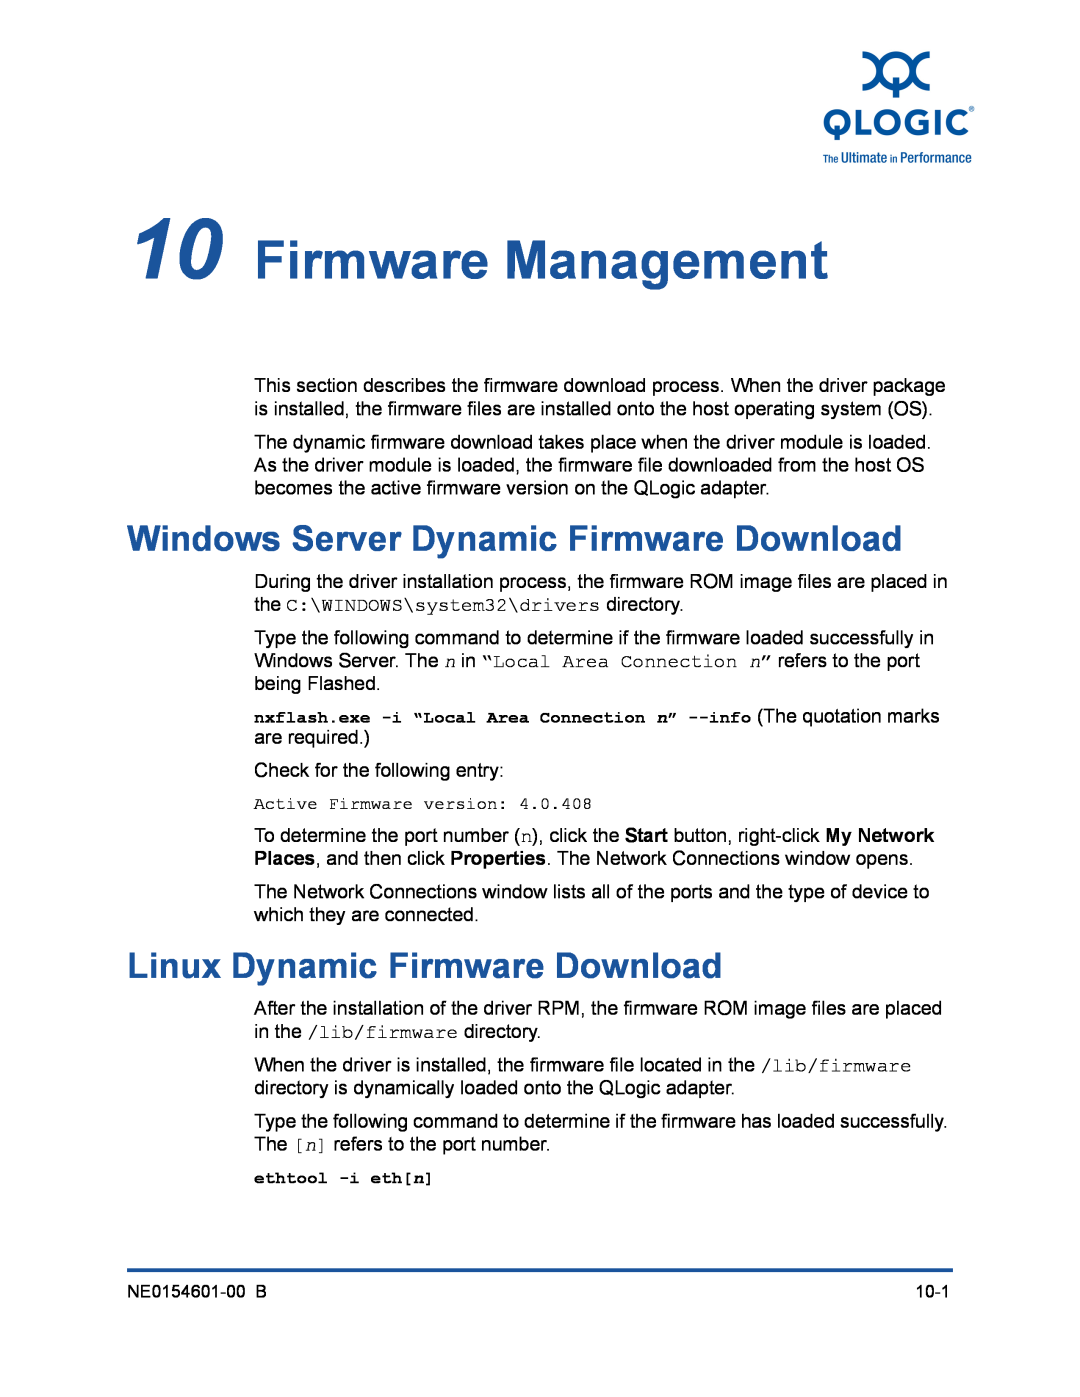 Q-Logic 3000, 3100 manual Firmware Management, Windows Server Dynamic Firmware Download, Linux Dynamic Firmware Download 